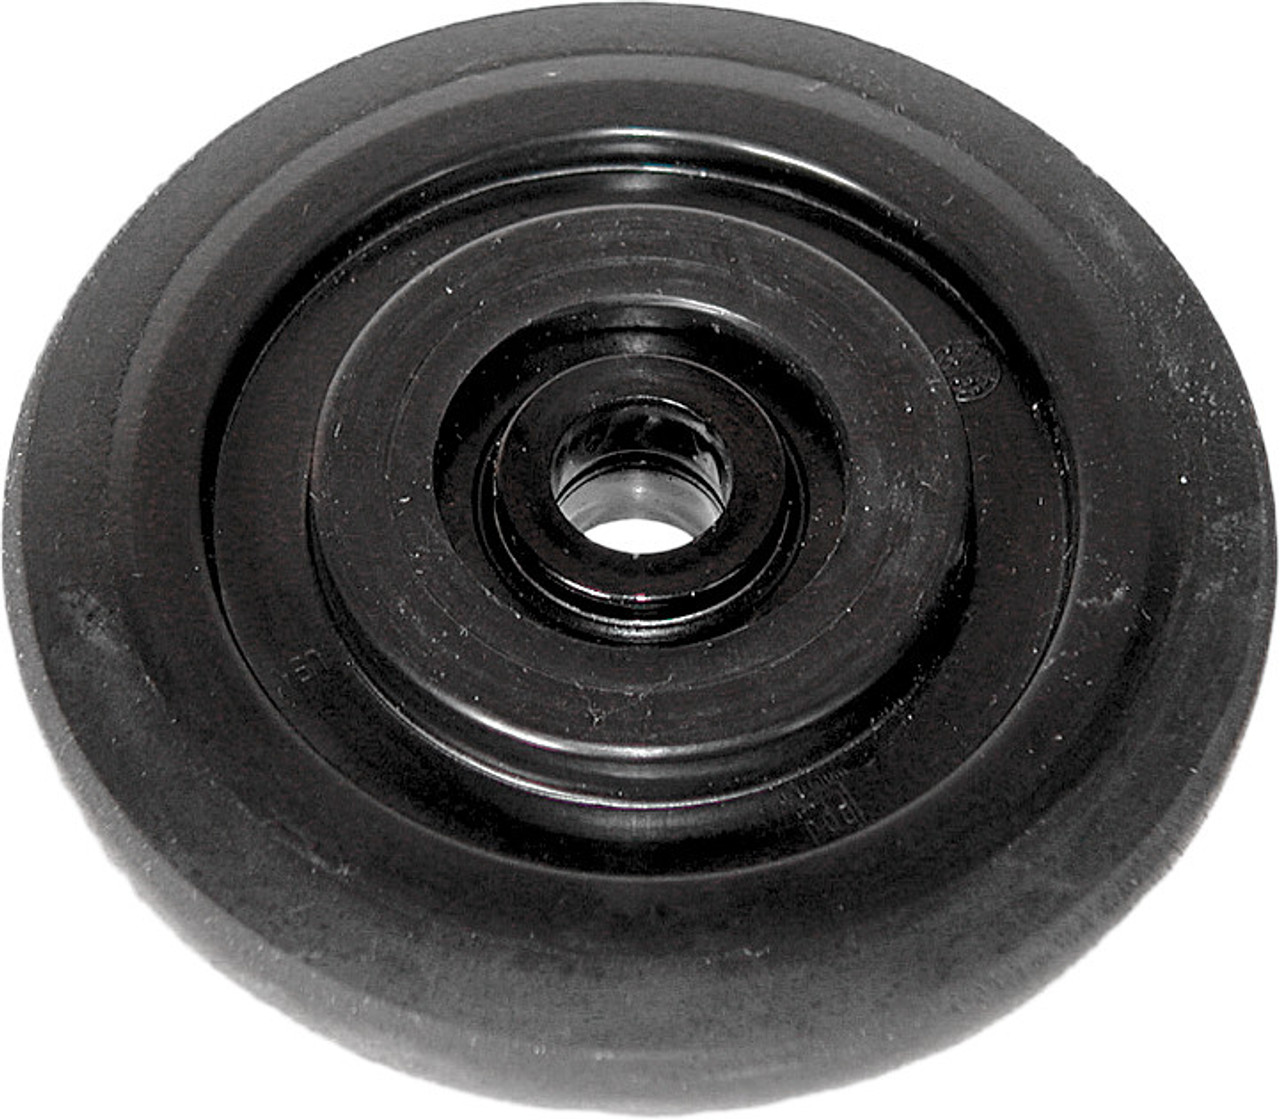 Idler Wheel compatible with Polaris - Black color, 5.38"X.750" Part# 541-5007 OEM# 1543015